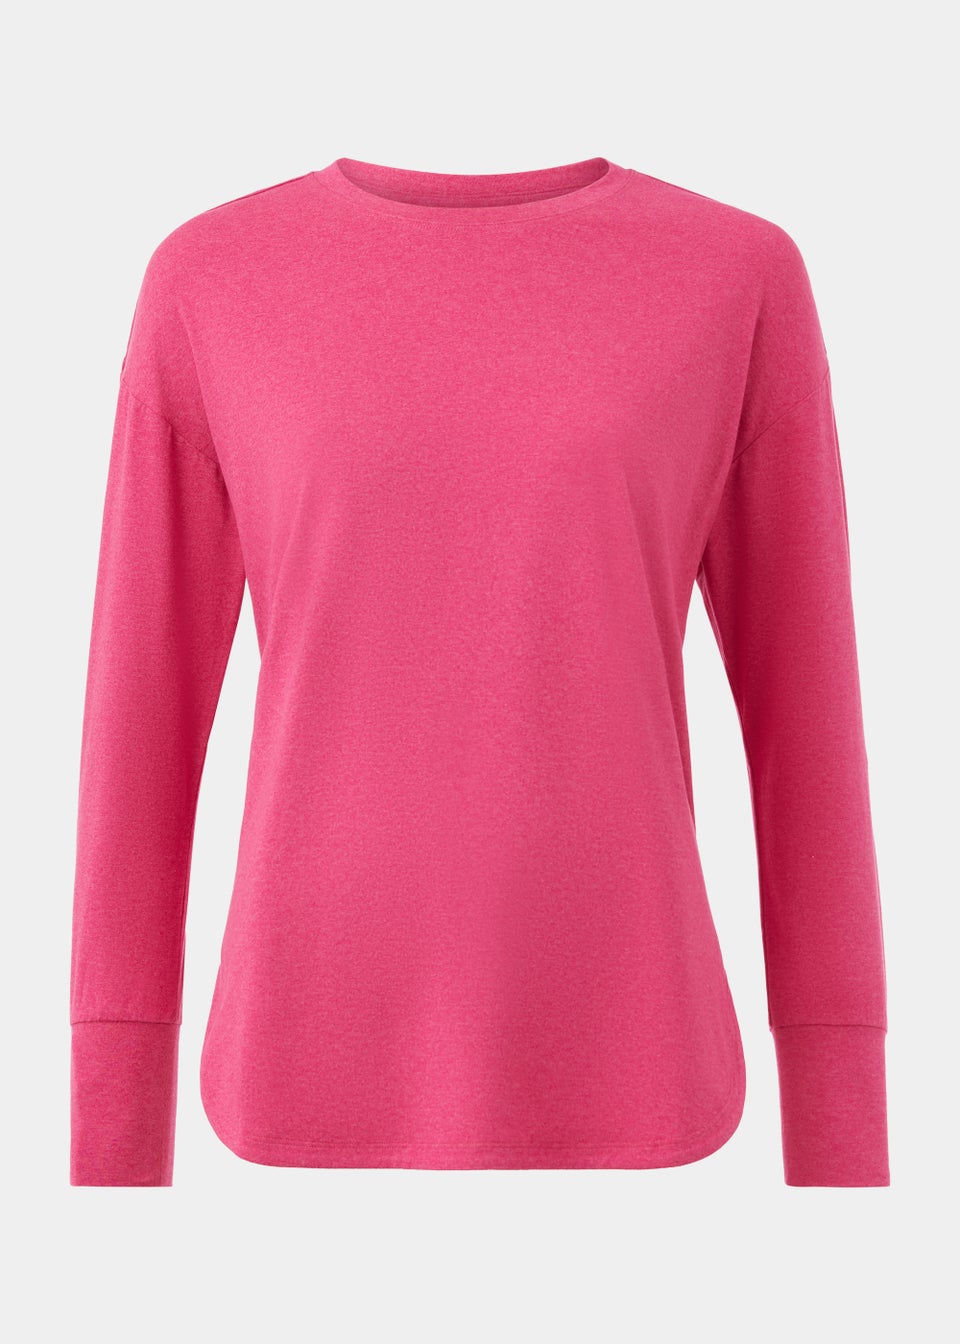 Souluxe Bright Pink Long Sleeve Sports T-Shirt - Matalan